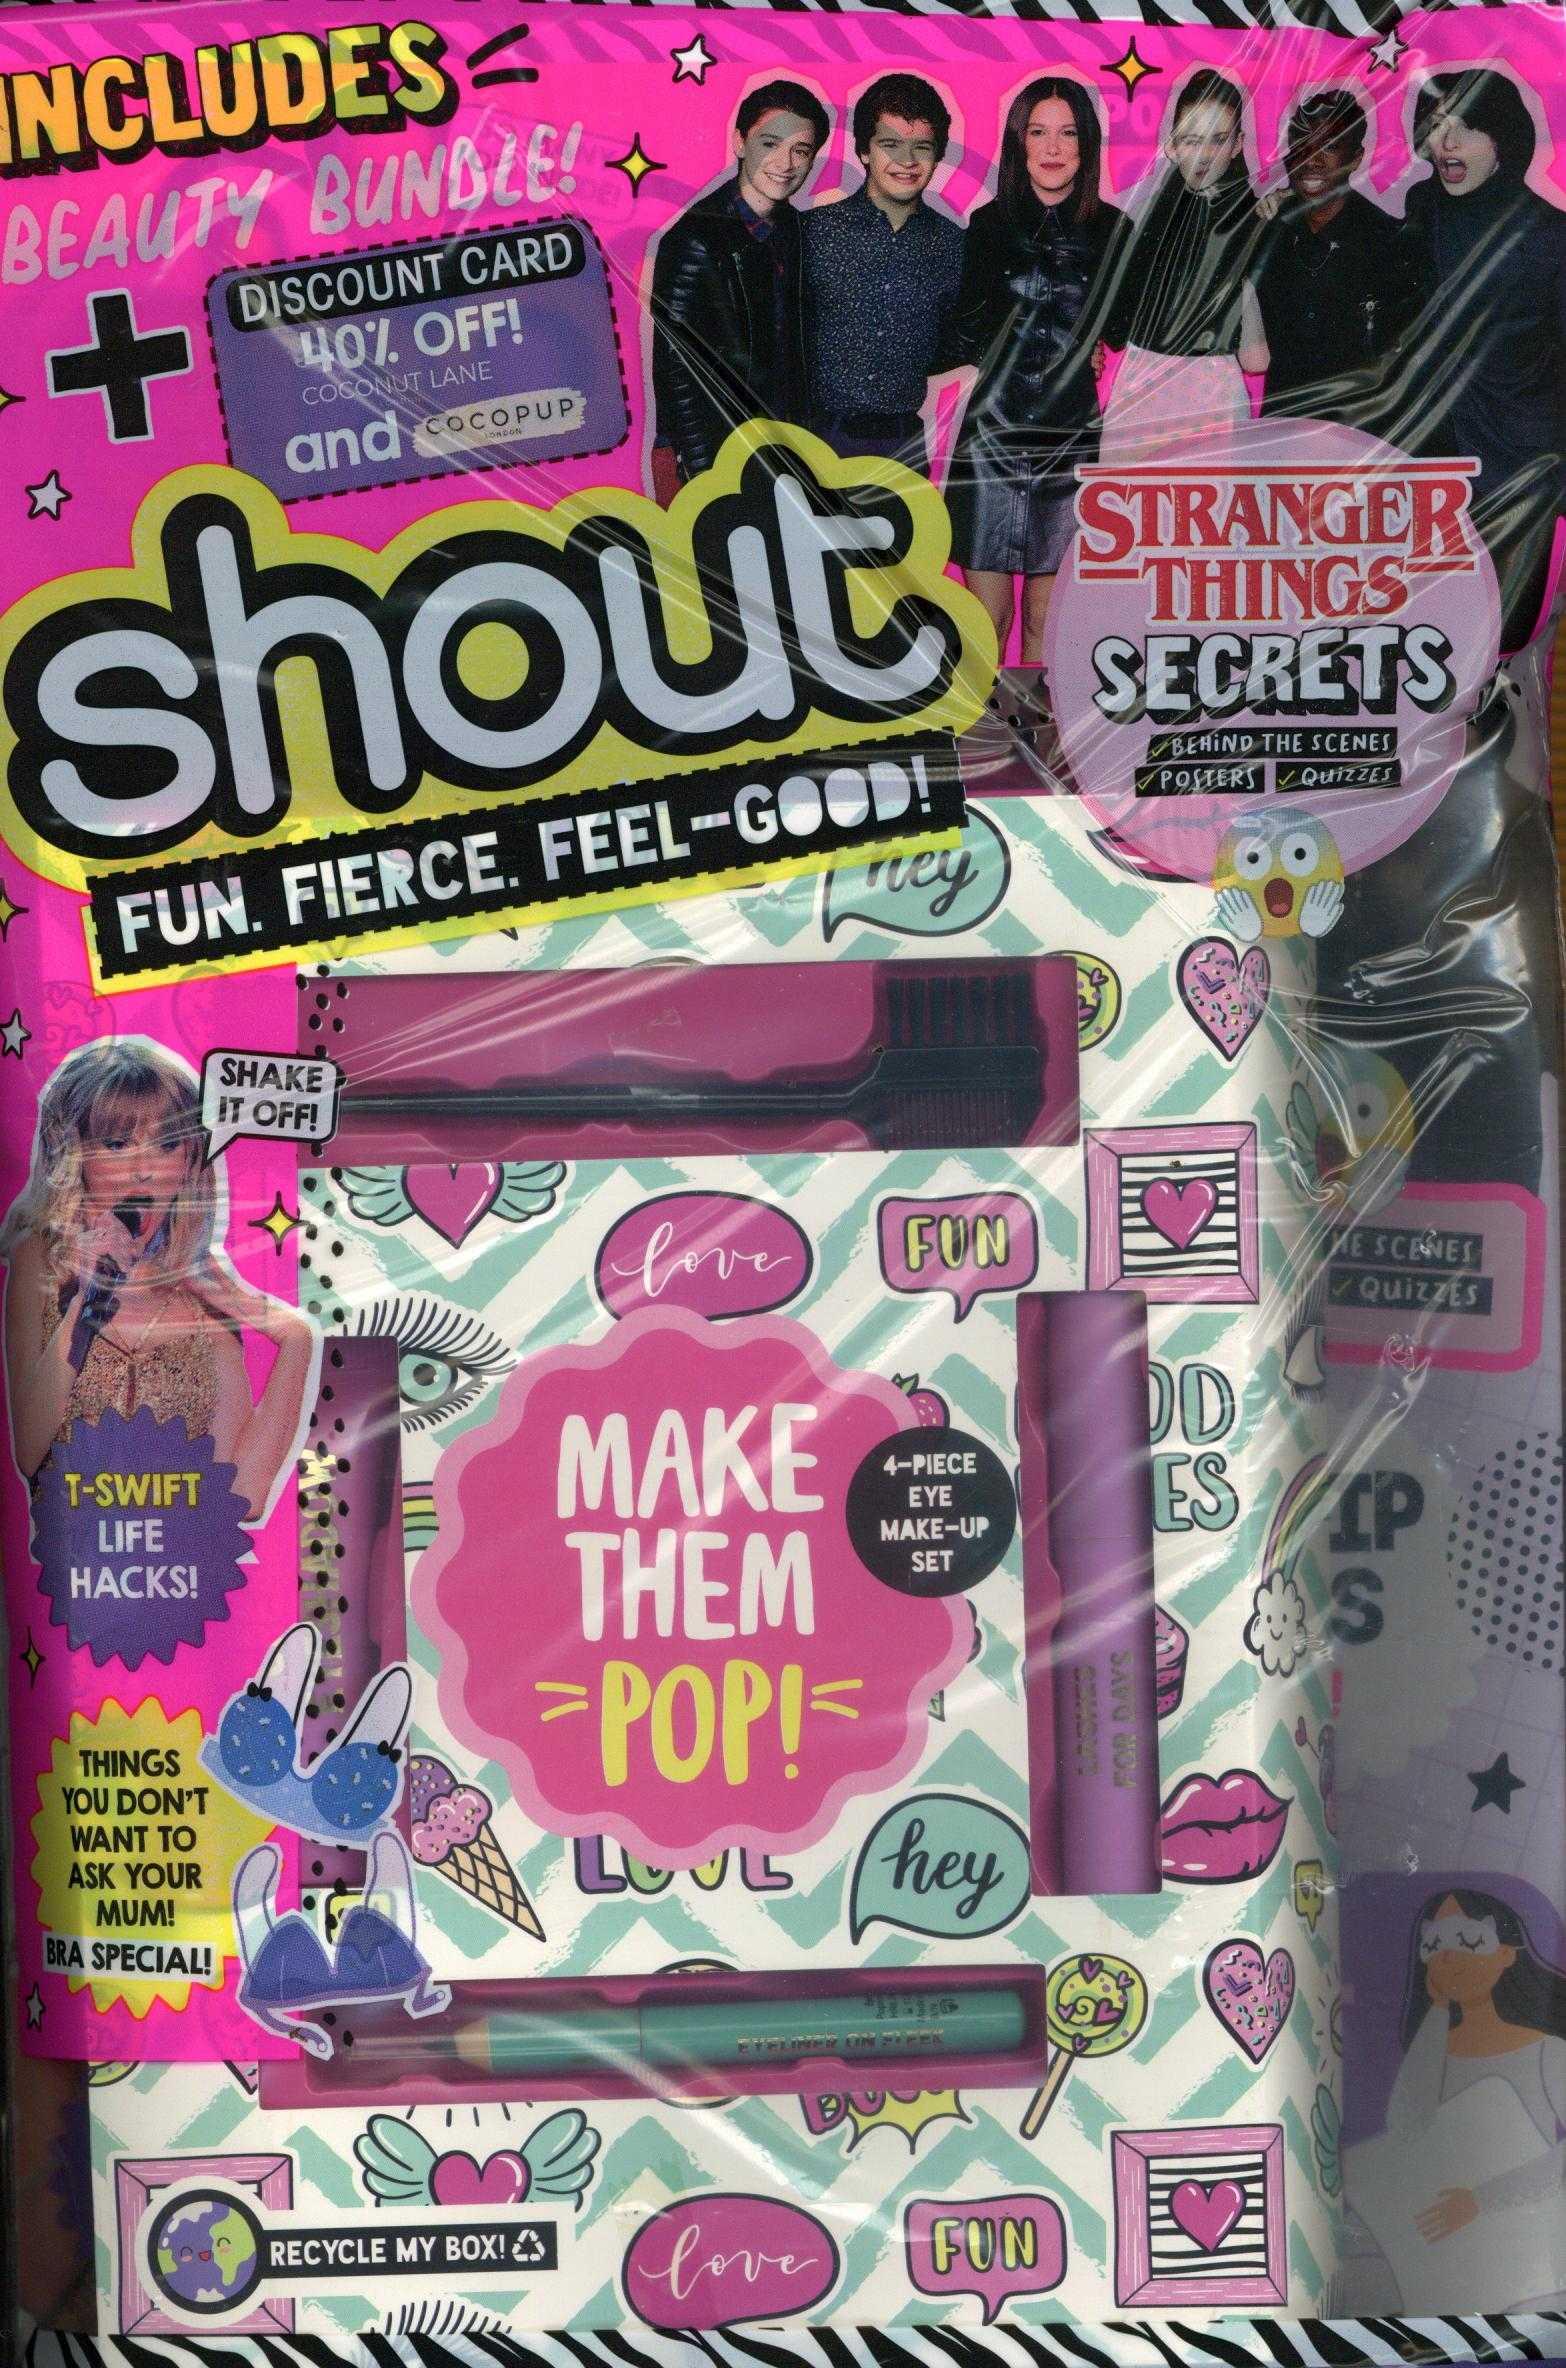 Shout Magazine